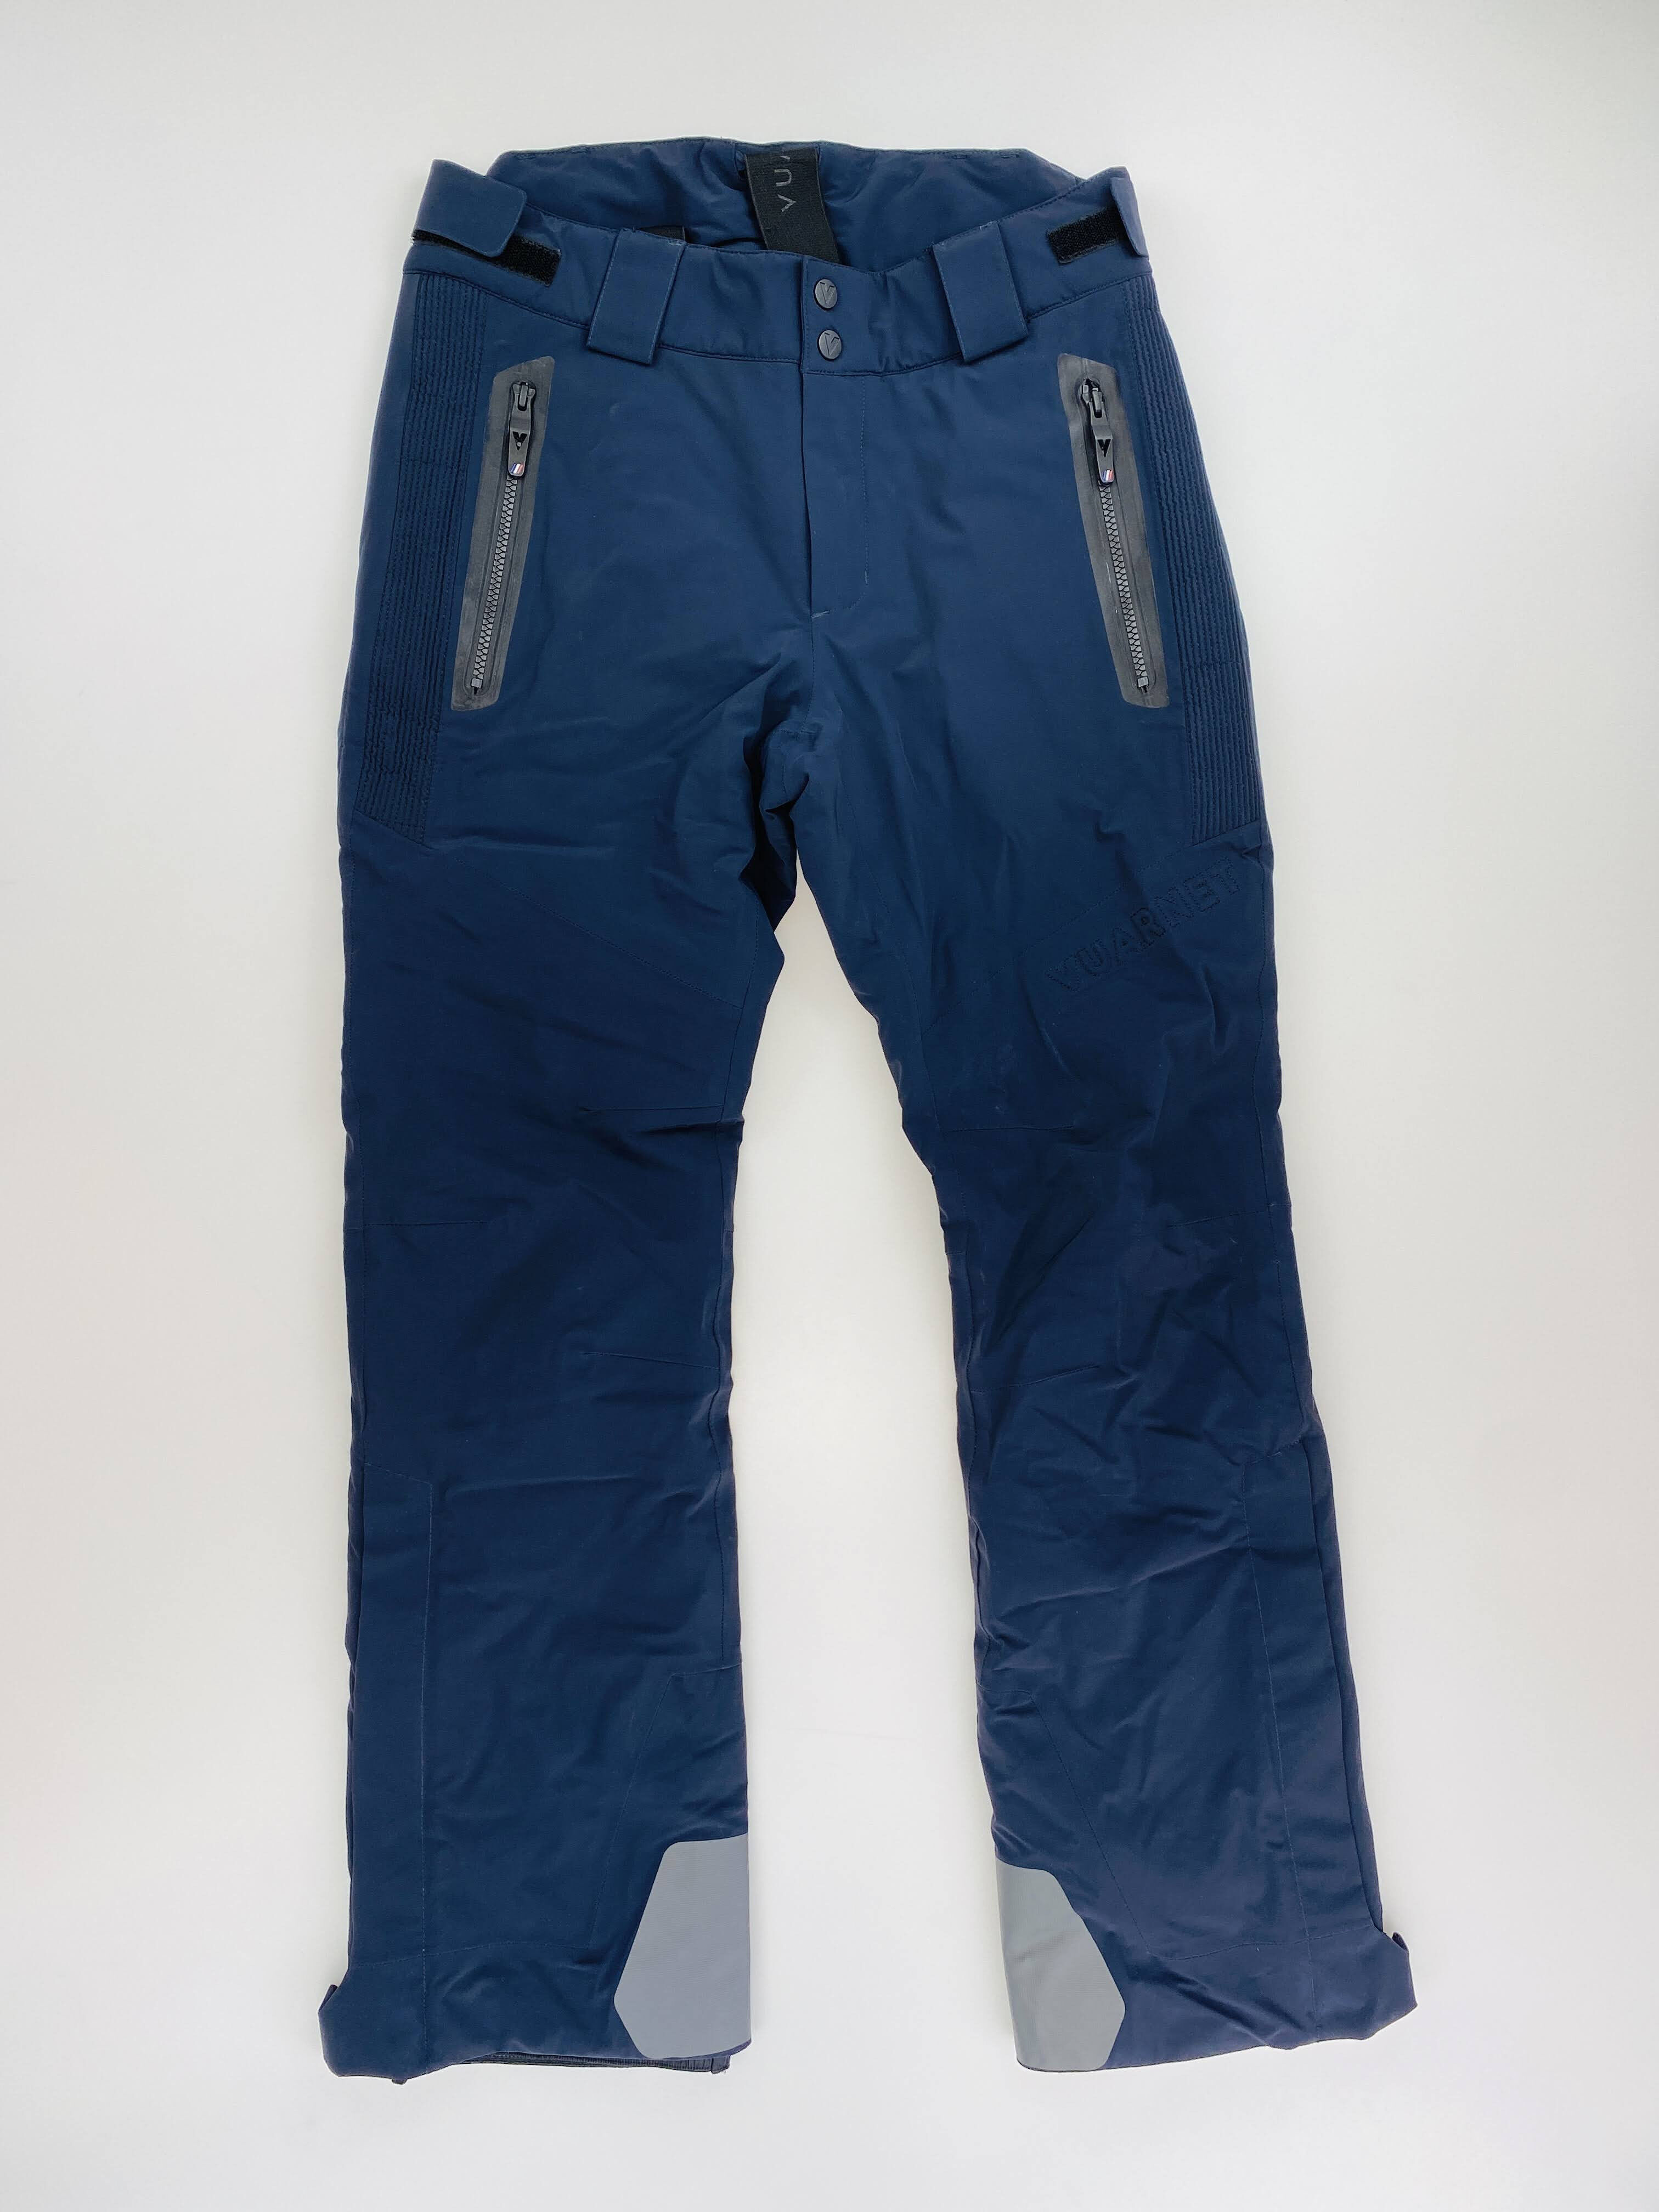 Vuarnet M'S Burnaby Pant - Second Hand Ski trousers - Men's - Blue oil - L | Hardloop